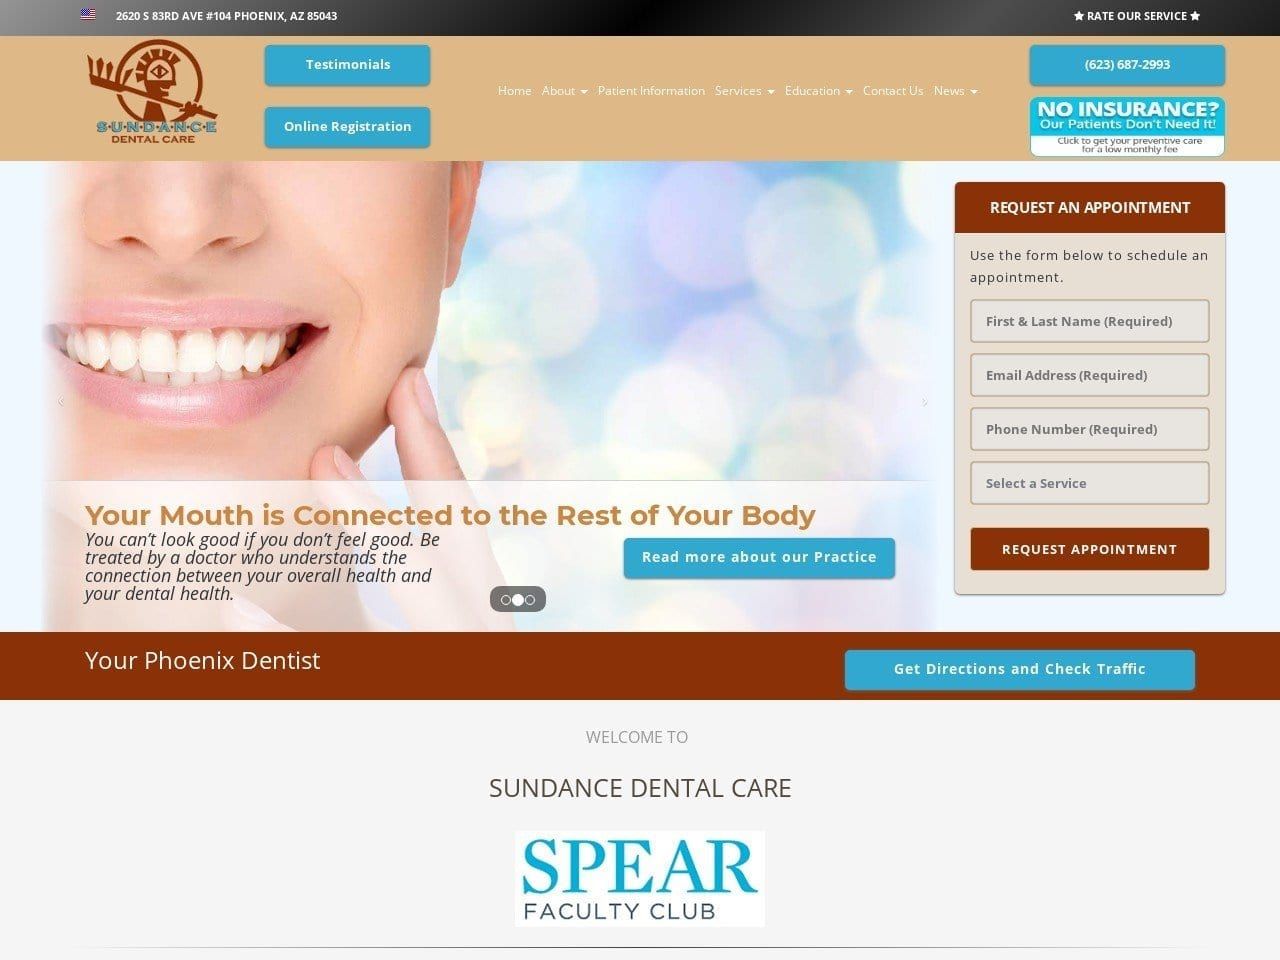 Sundance Dental Care Website Screenshot from sundancedentalcare.com